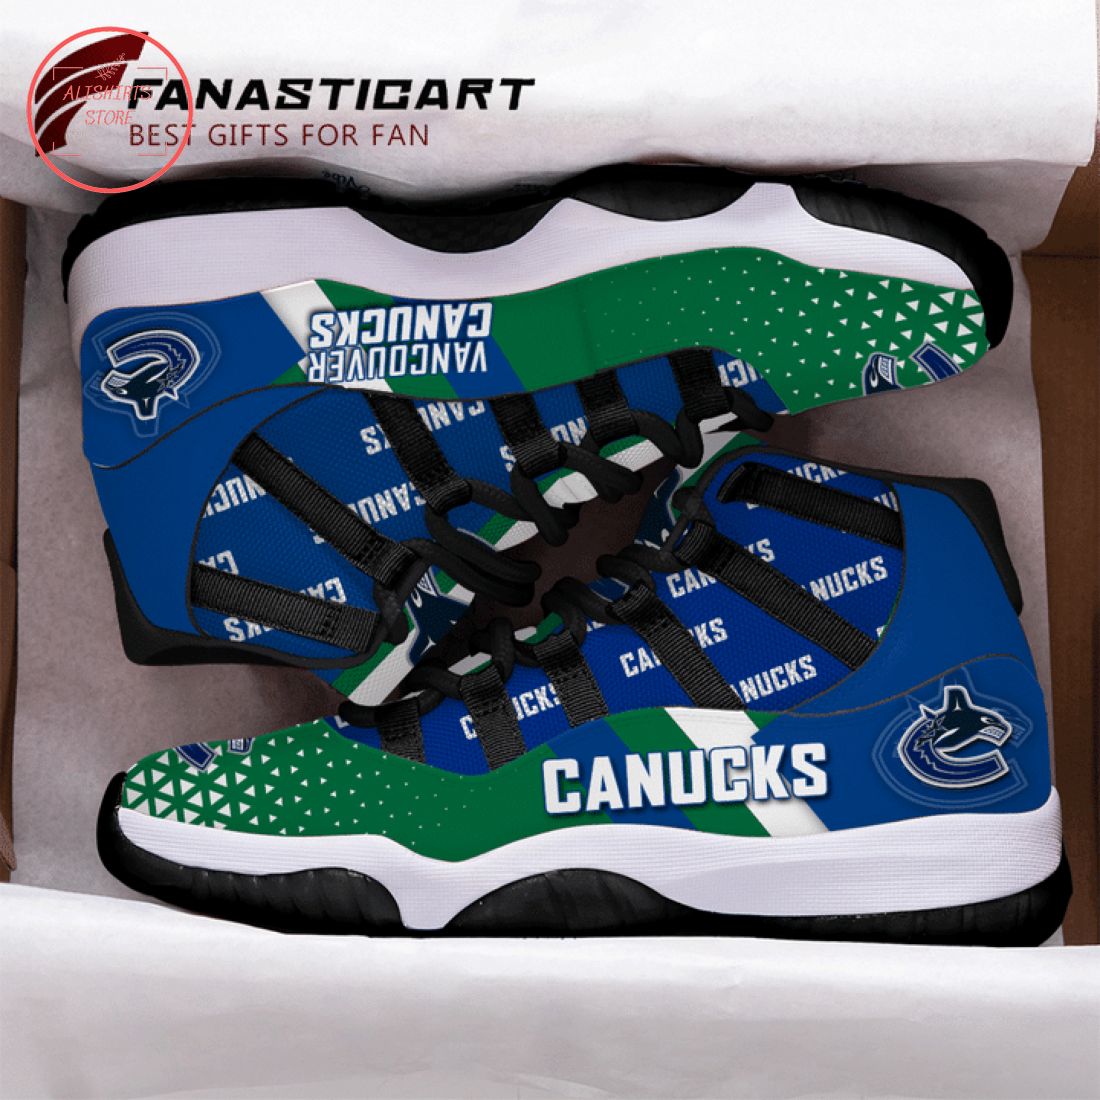 NHL Vancouver Canucks Air Jordan 11 Sneaker Shoes